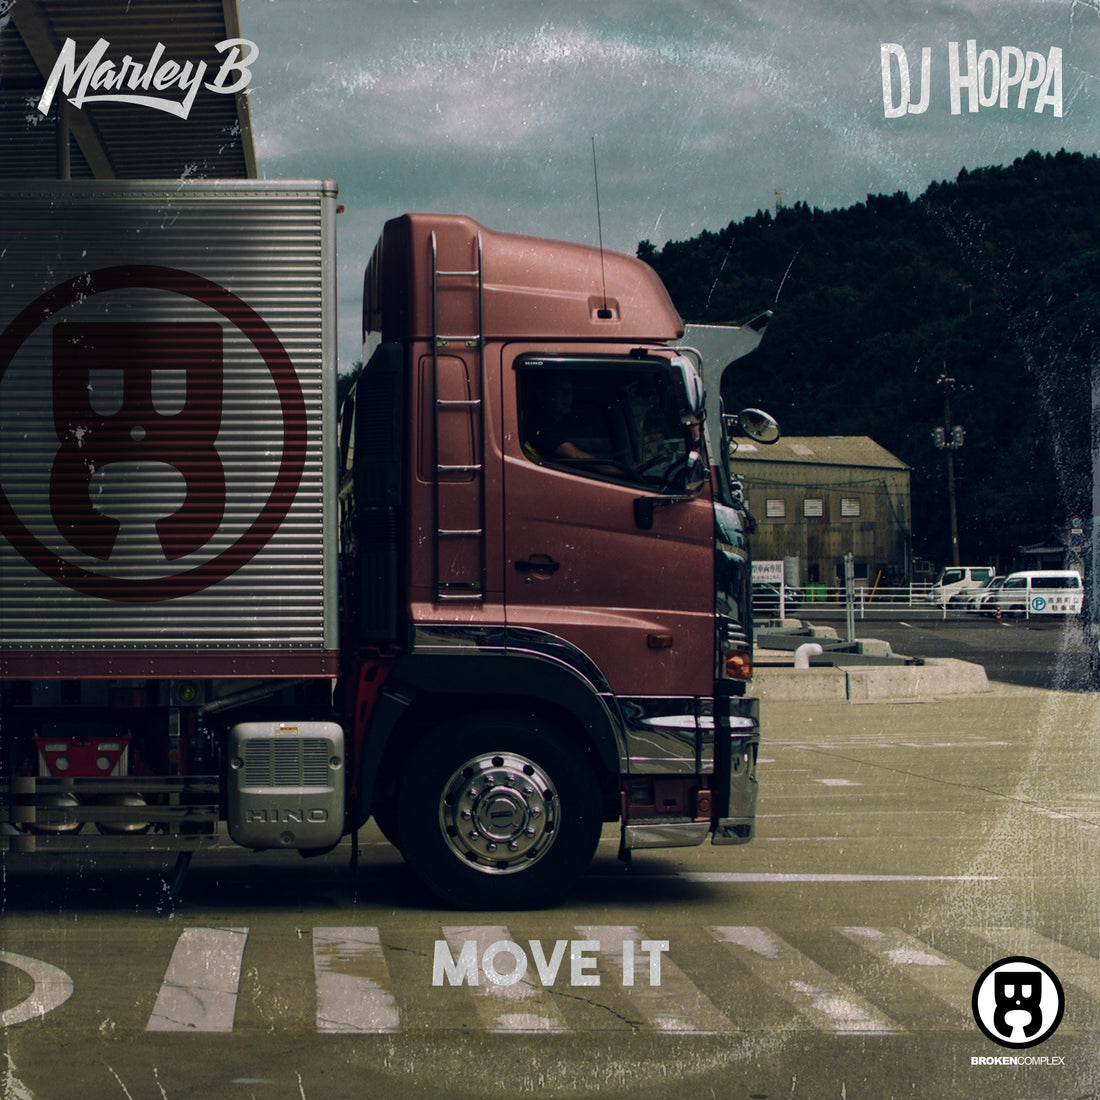 New Single + Video: Marley B. & DJ Hoppa "Move It"